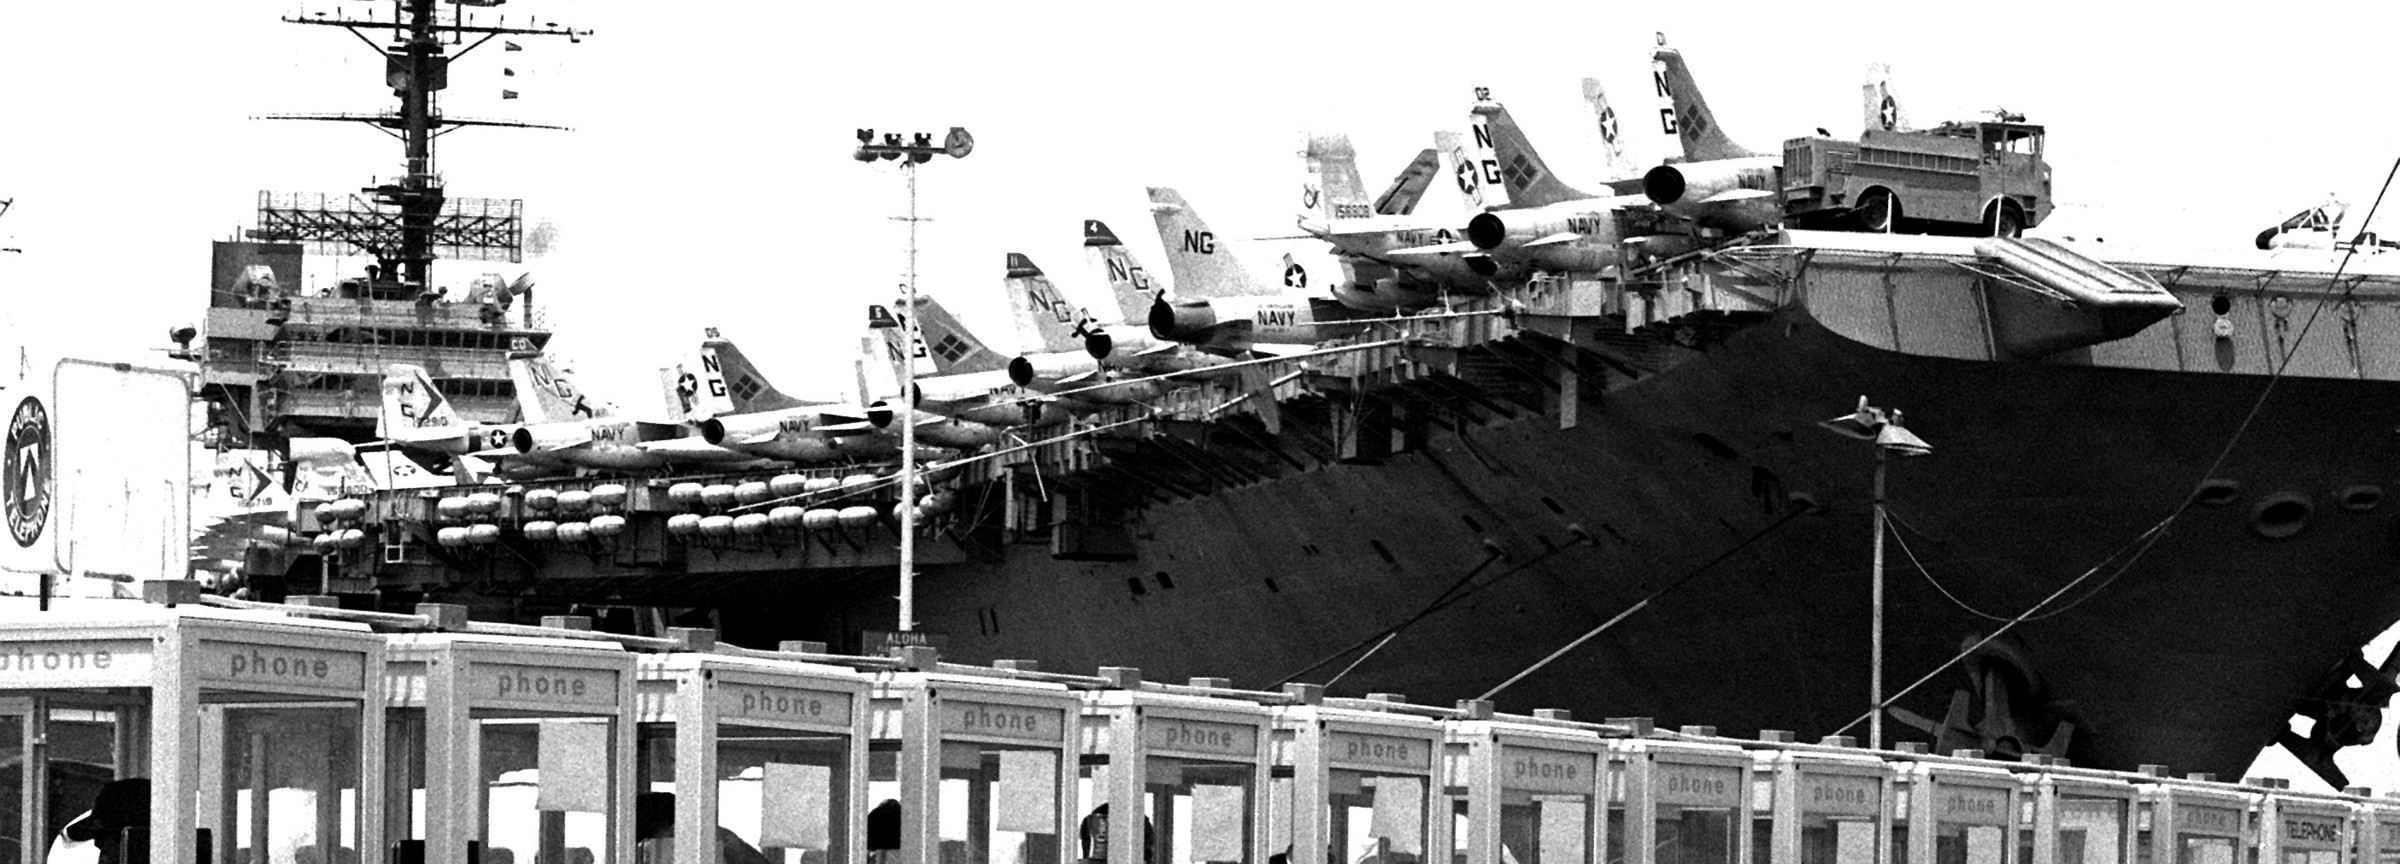 cv-64 uss constellation kitty hawk class aircraft carrier air wing cvw-9 us navy pearl harbor hawaii 57